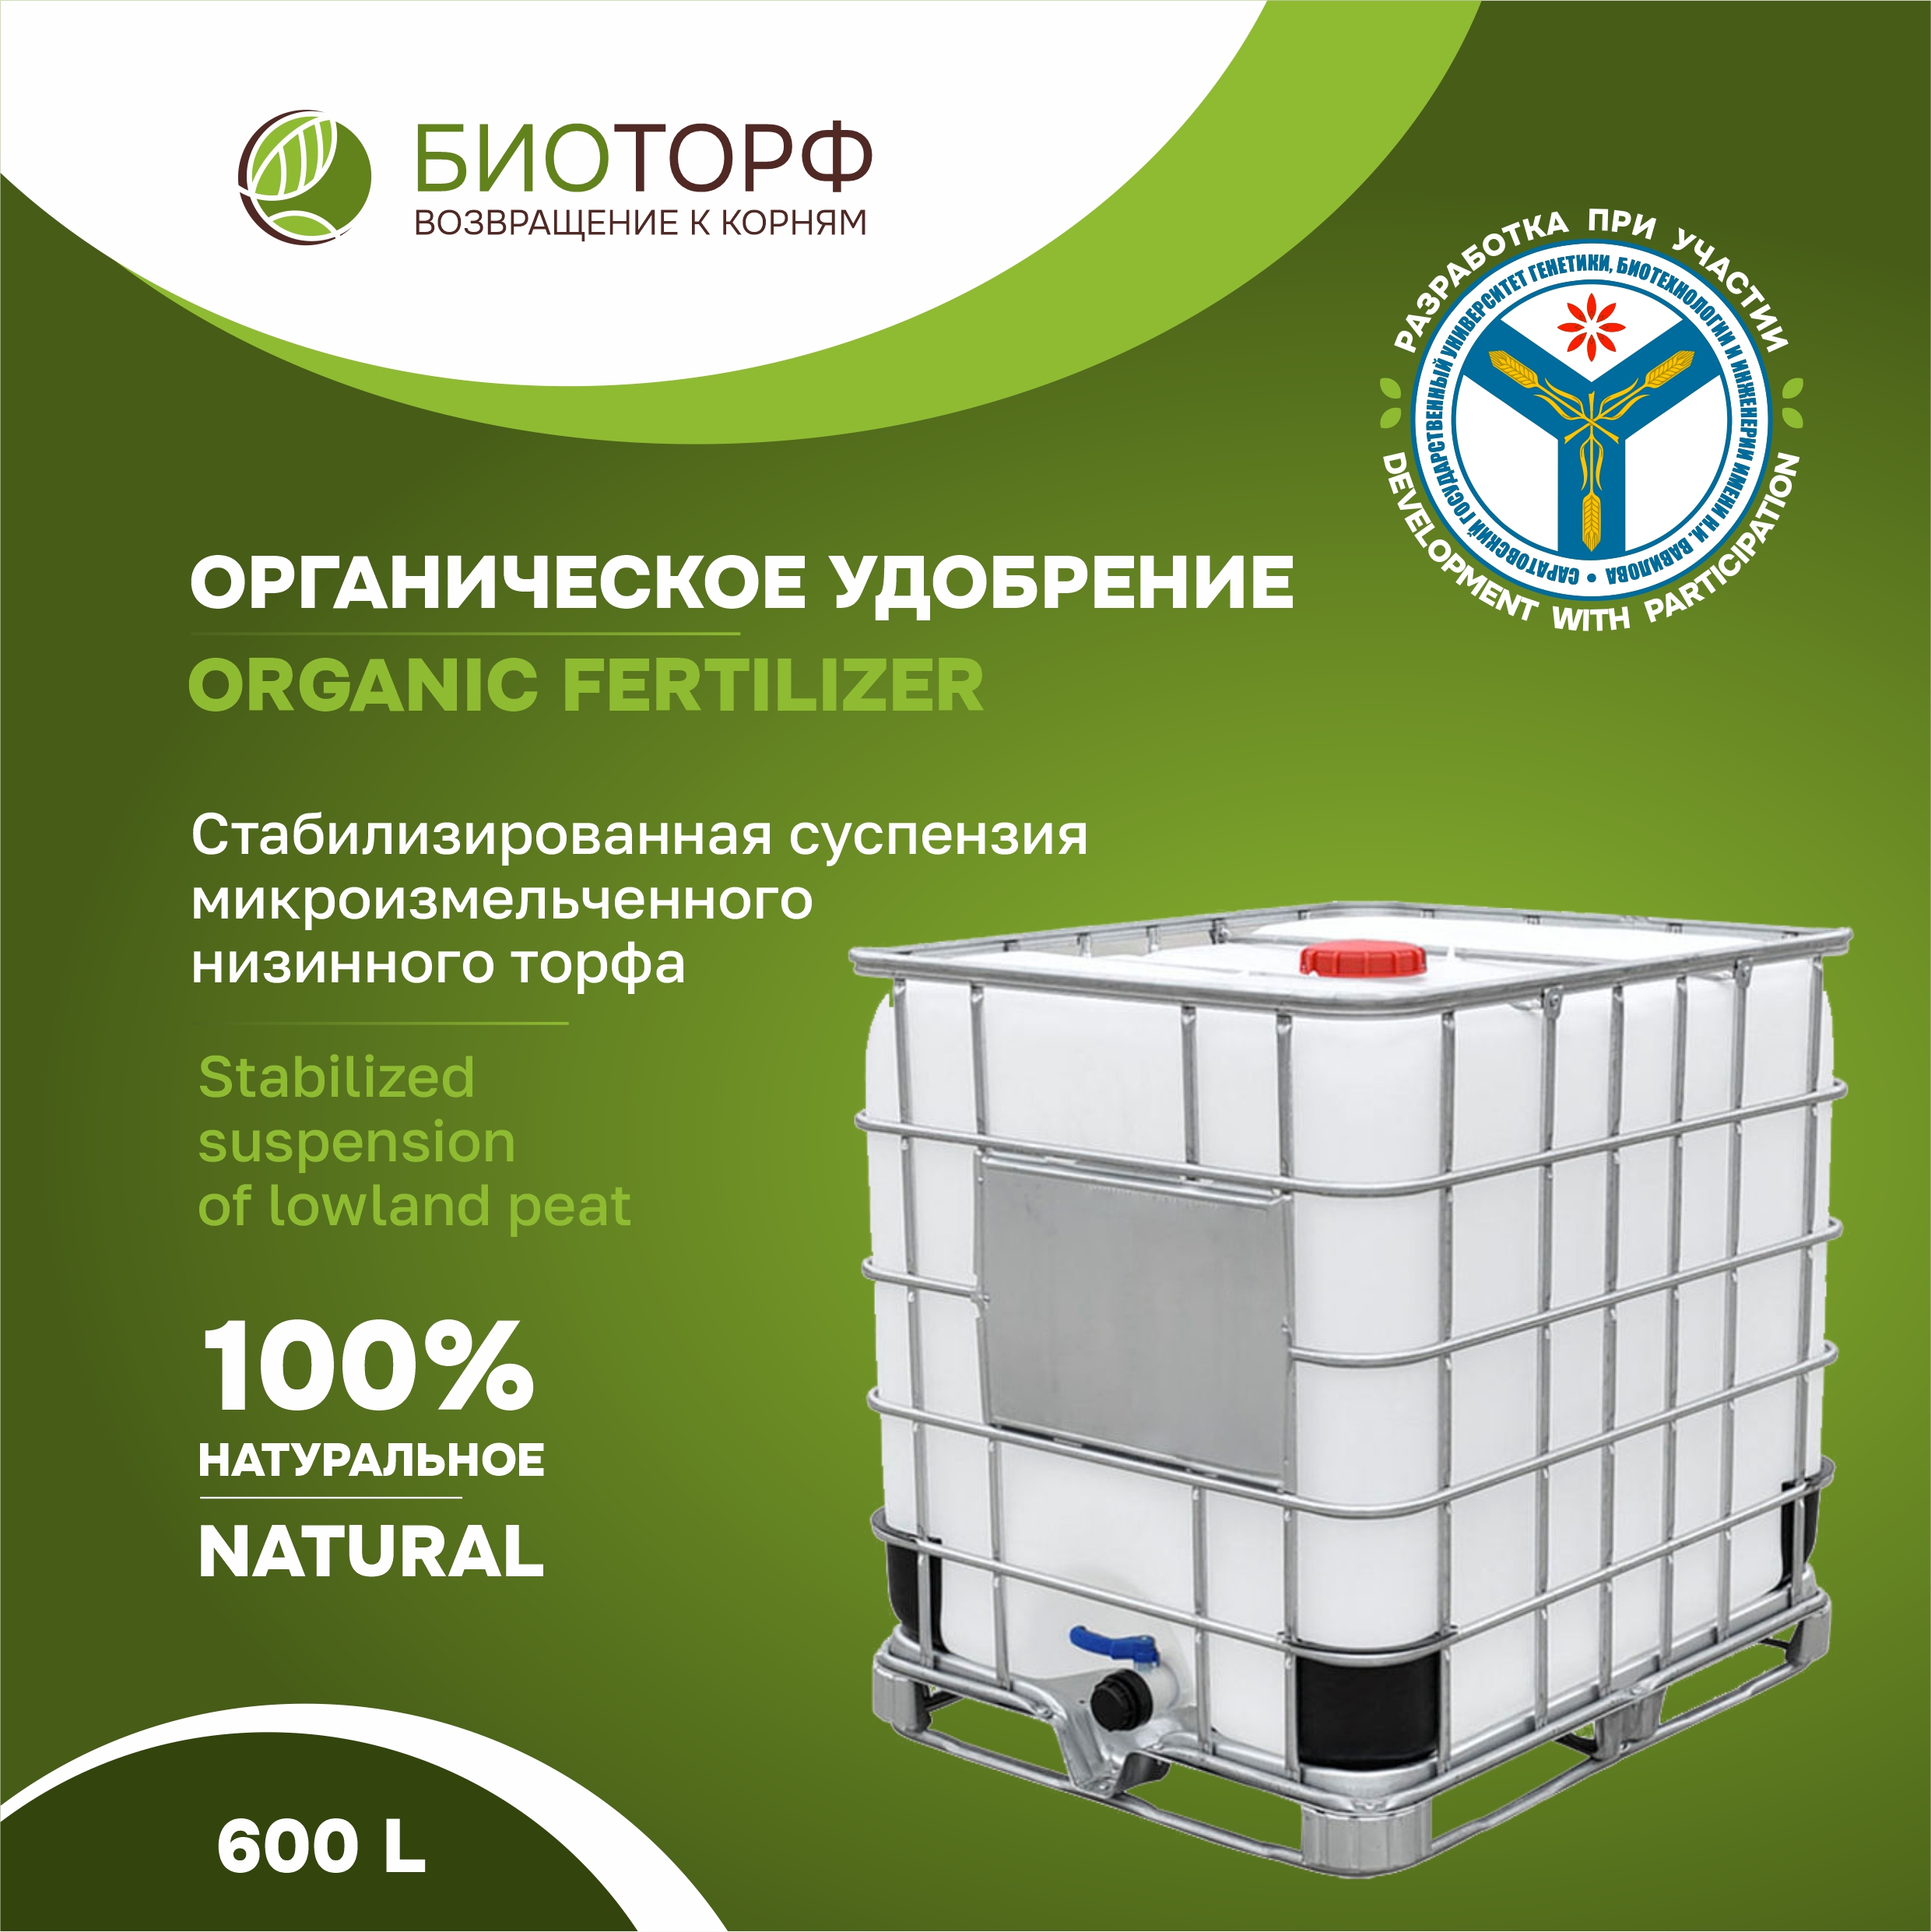 Biotorf, organic pasty fertilizer, 600l